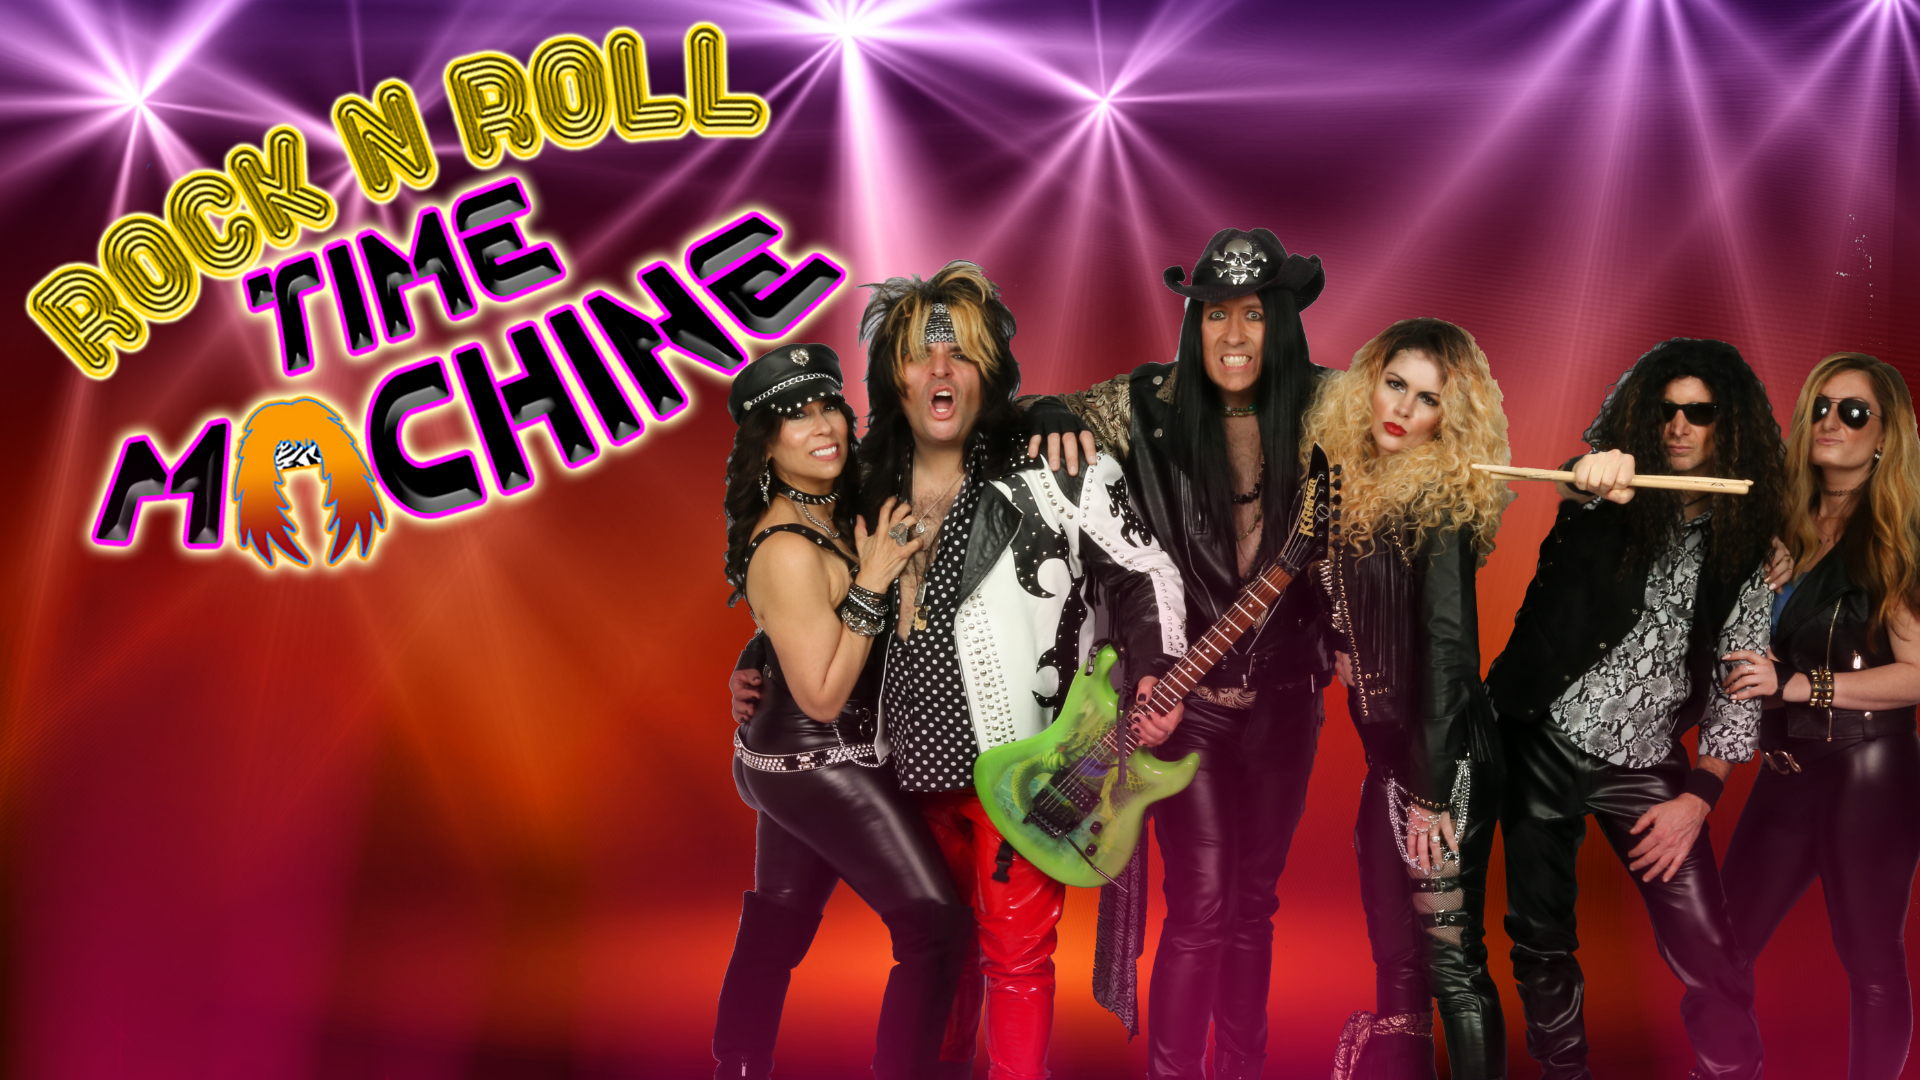 Great Rock N Roll Time Machine